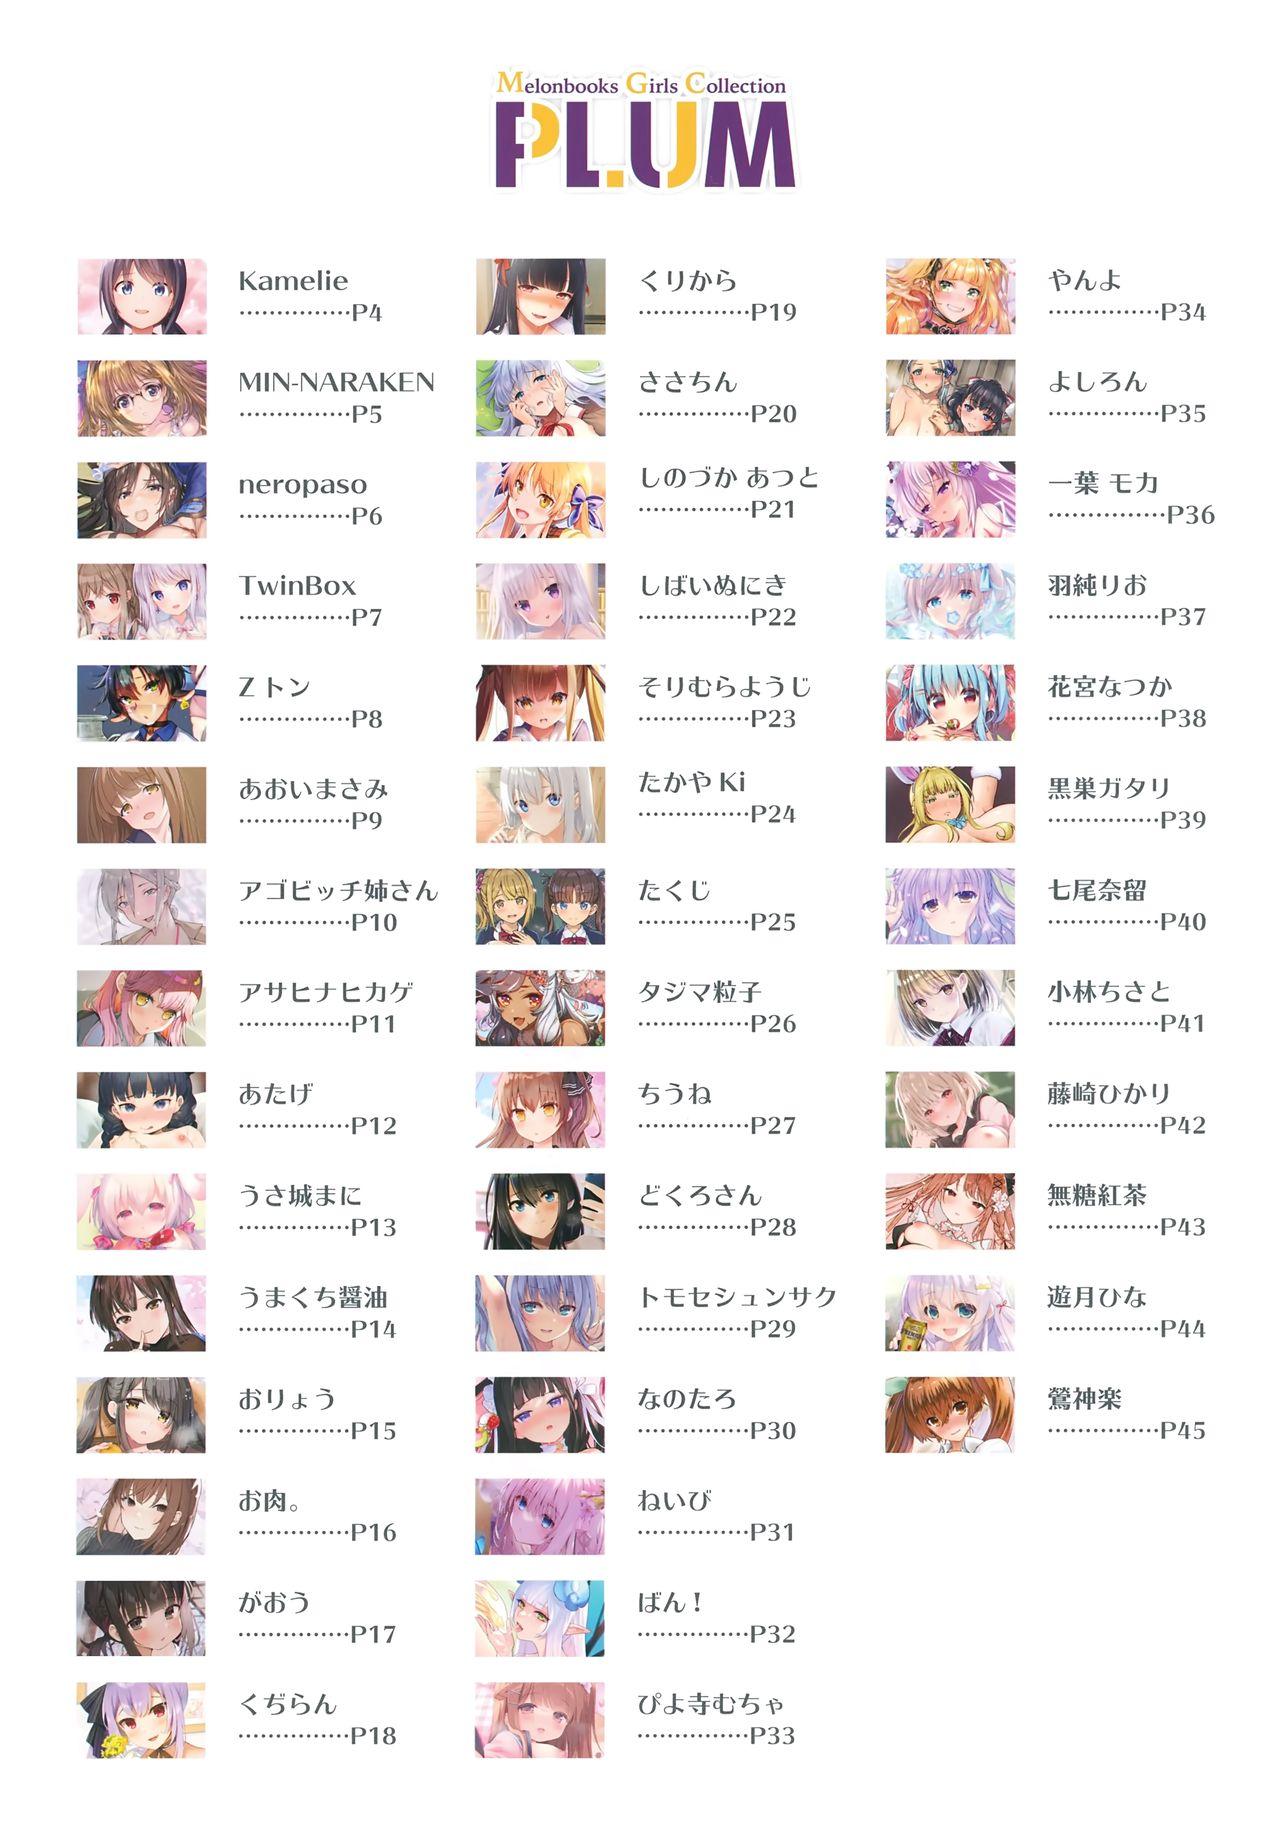 Akihabara Choudoujinsai Kaisaikinenshi Melonbooks Girls Collection Plum 3